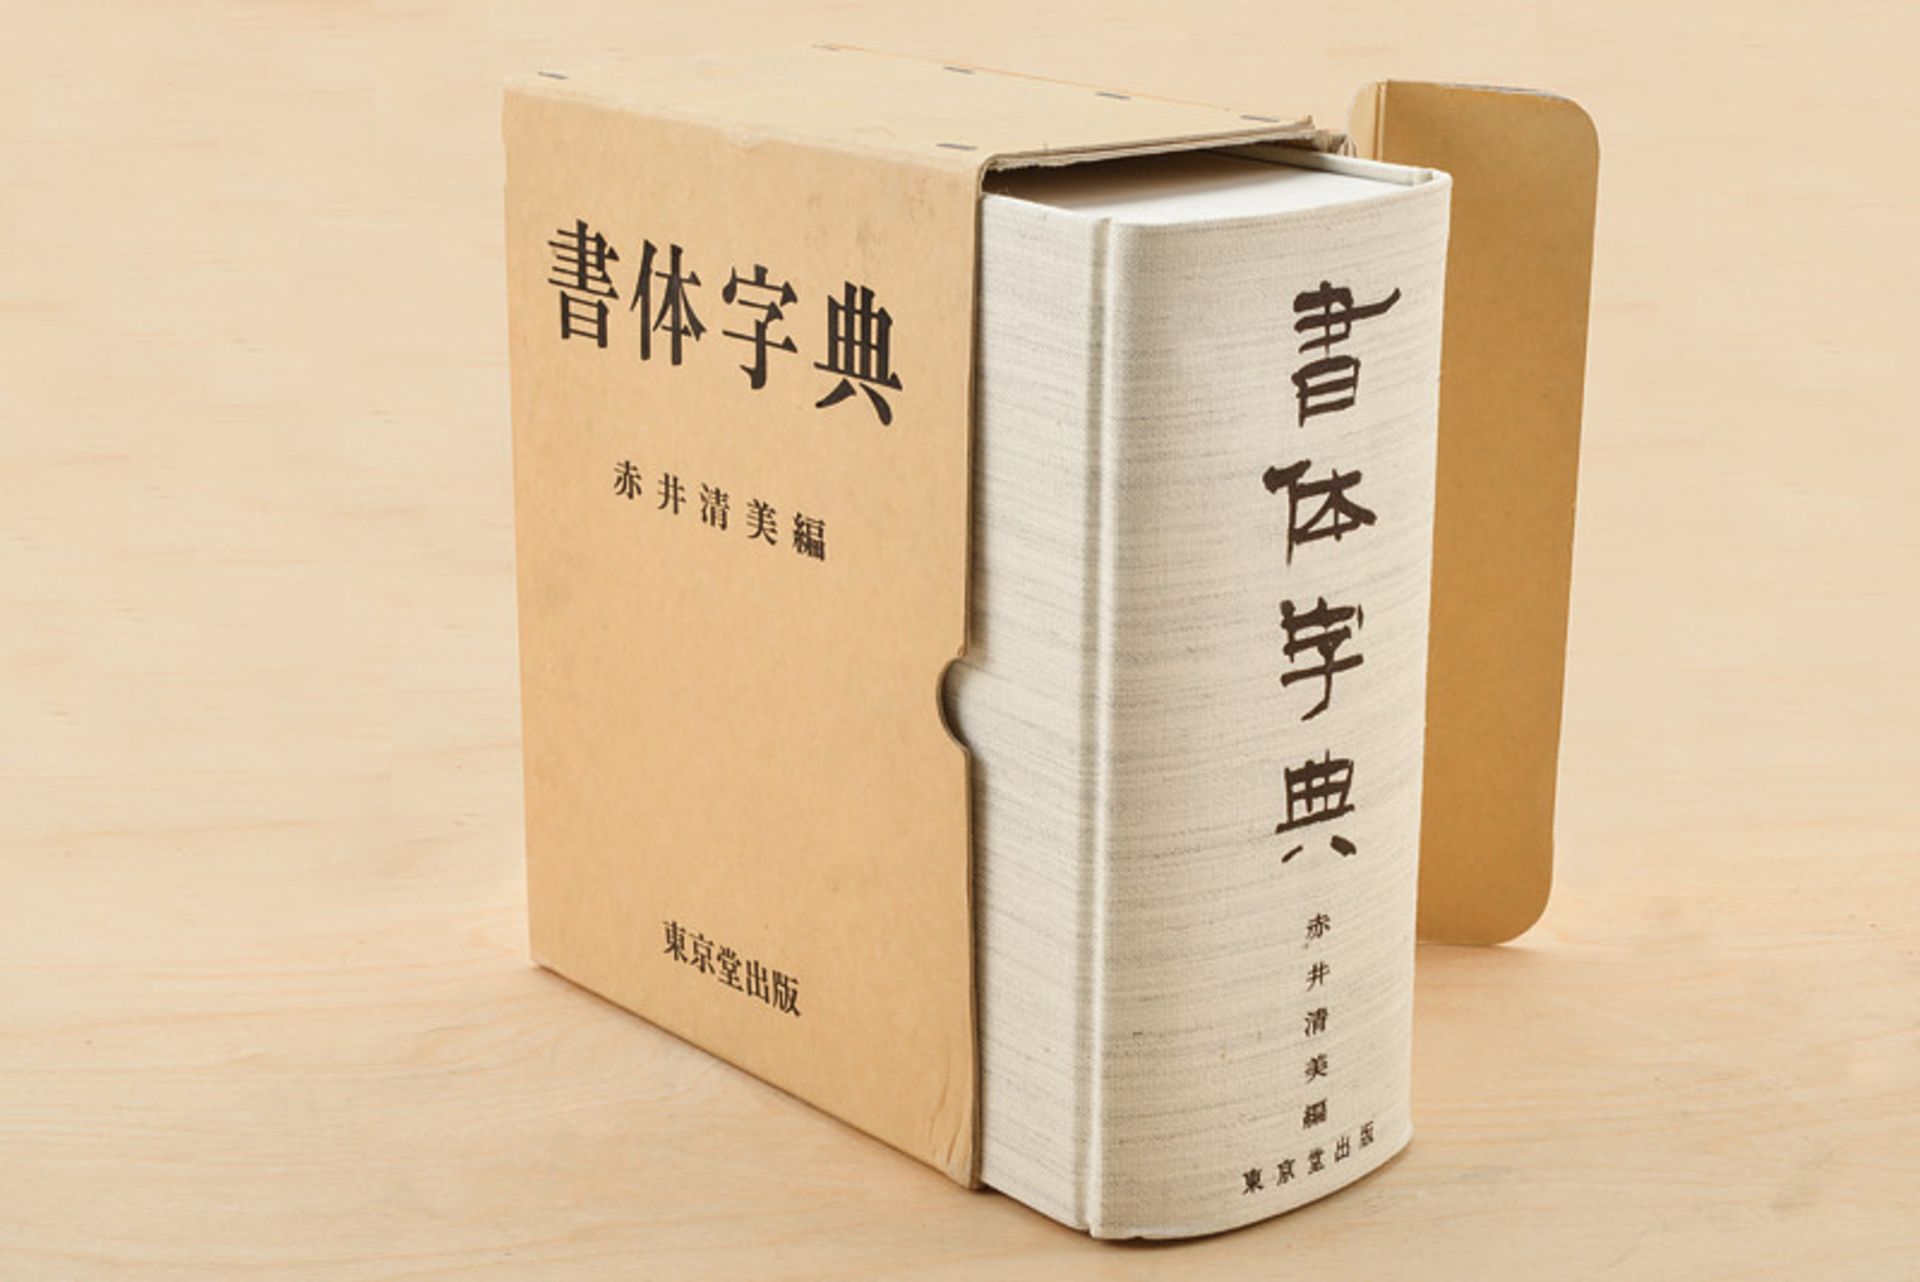 Akai, Shoji dating: 20th Century provenance: Japan "Shotai Jiten" (Dictionary of Penmanship